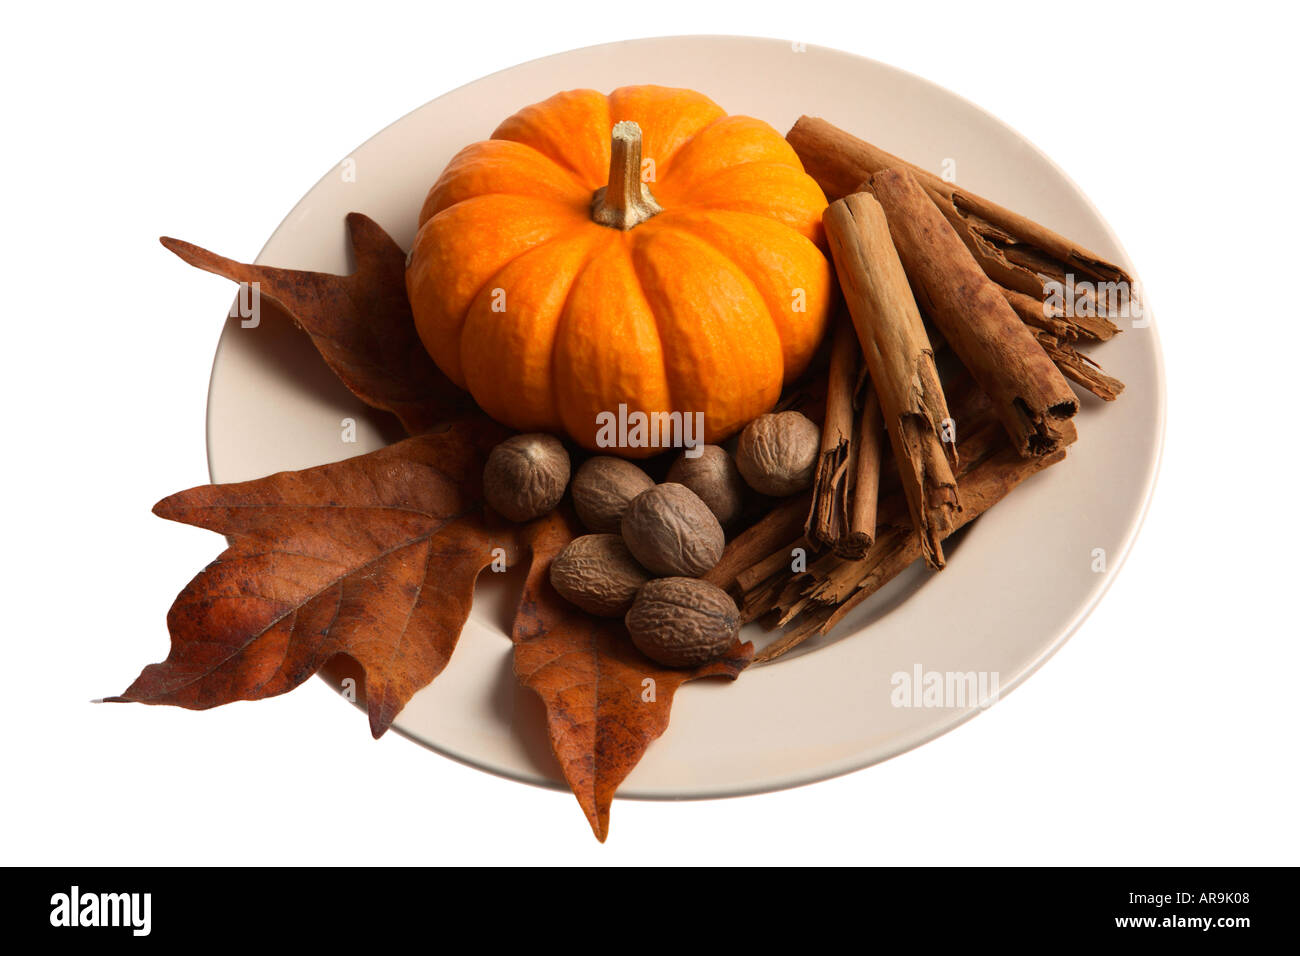 Fall still life with mini pumpkin, nutmeg & cinnamon spices and maple leaf Stock Photo